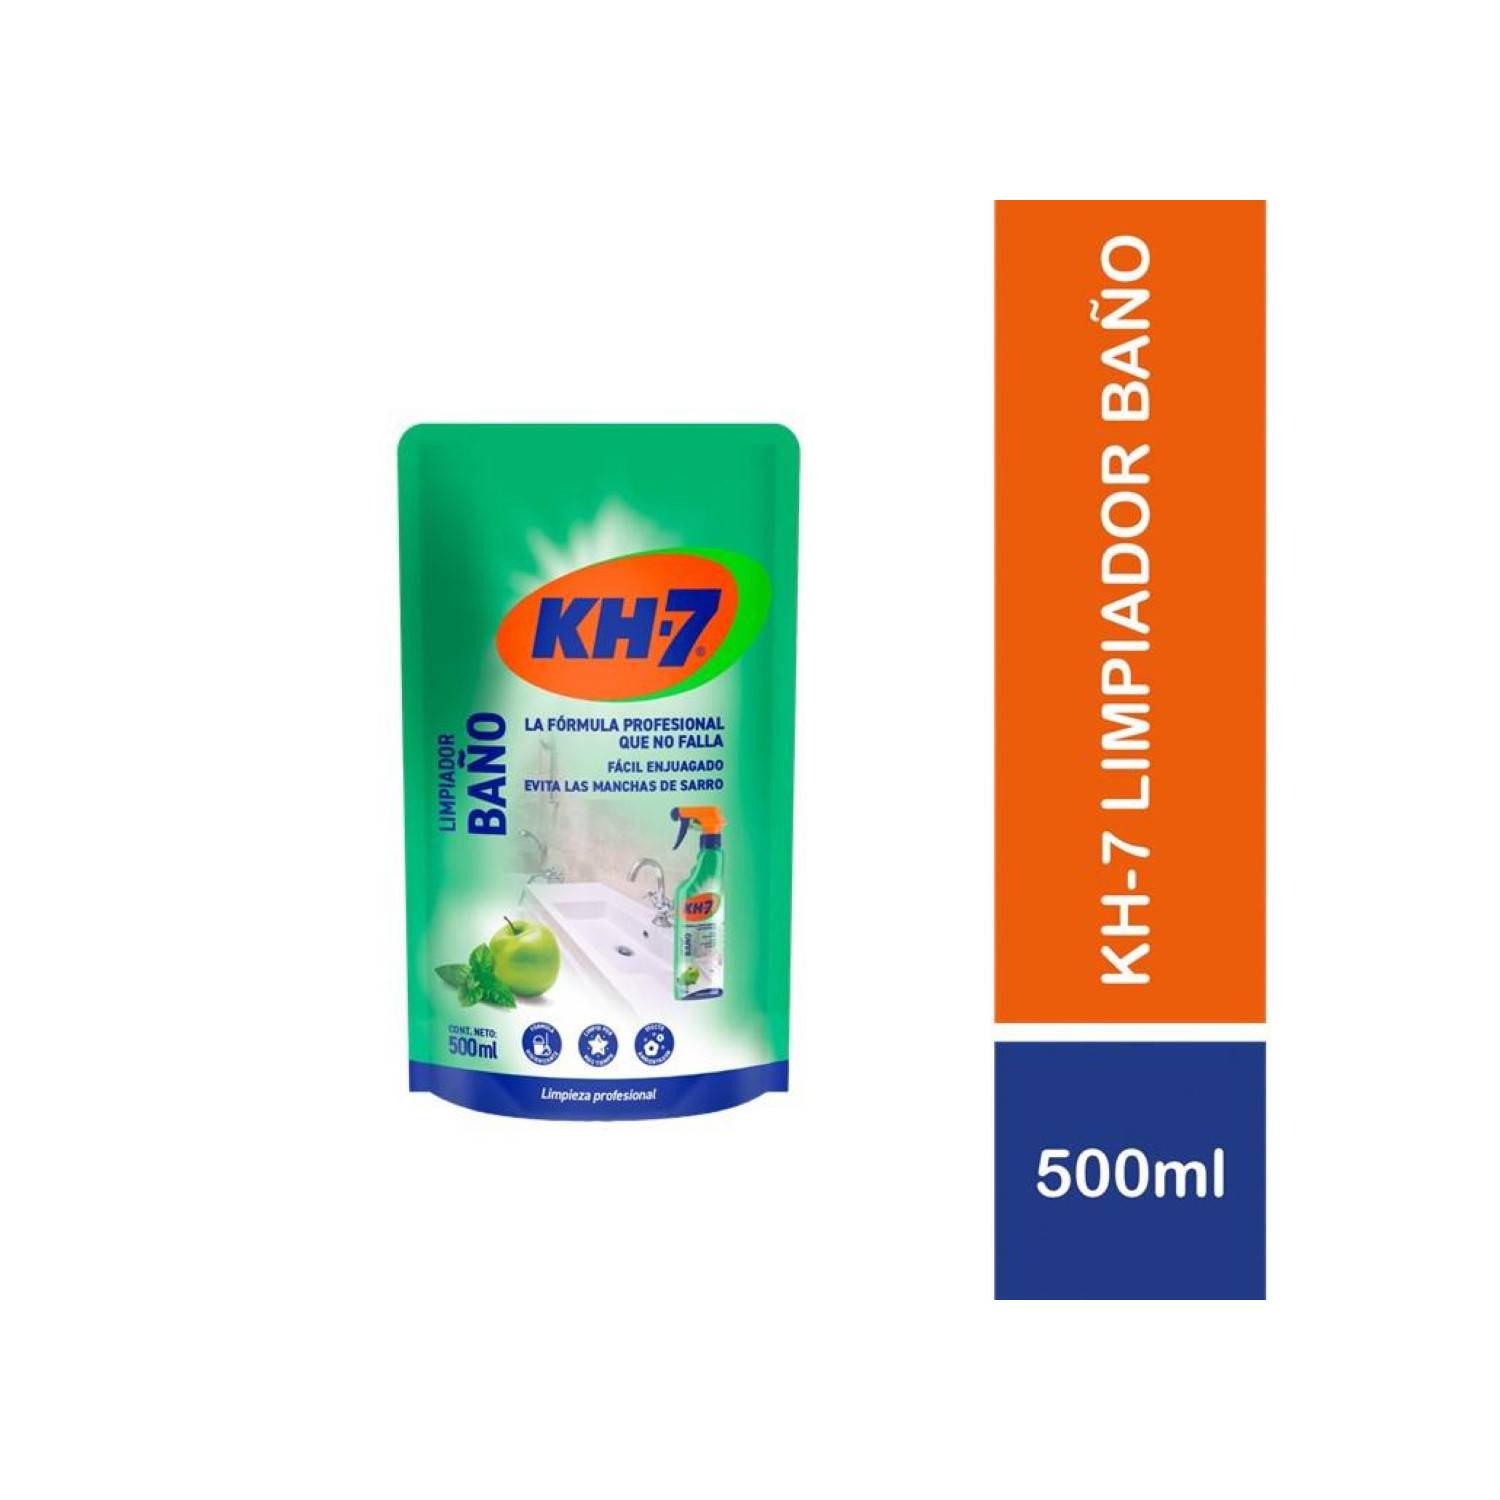 KH-7 on X: KH-7 Baños Desinfectante te ayudará a mantener a raya